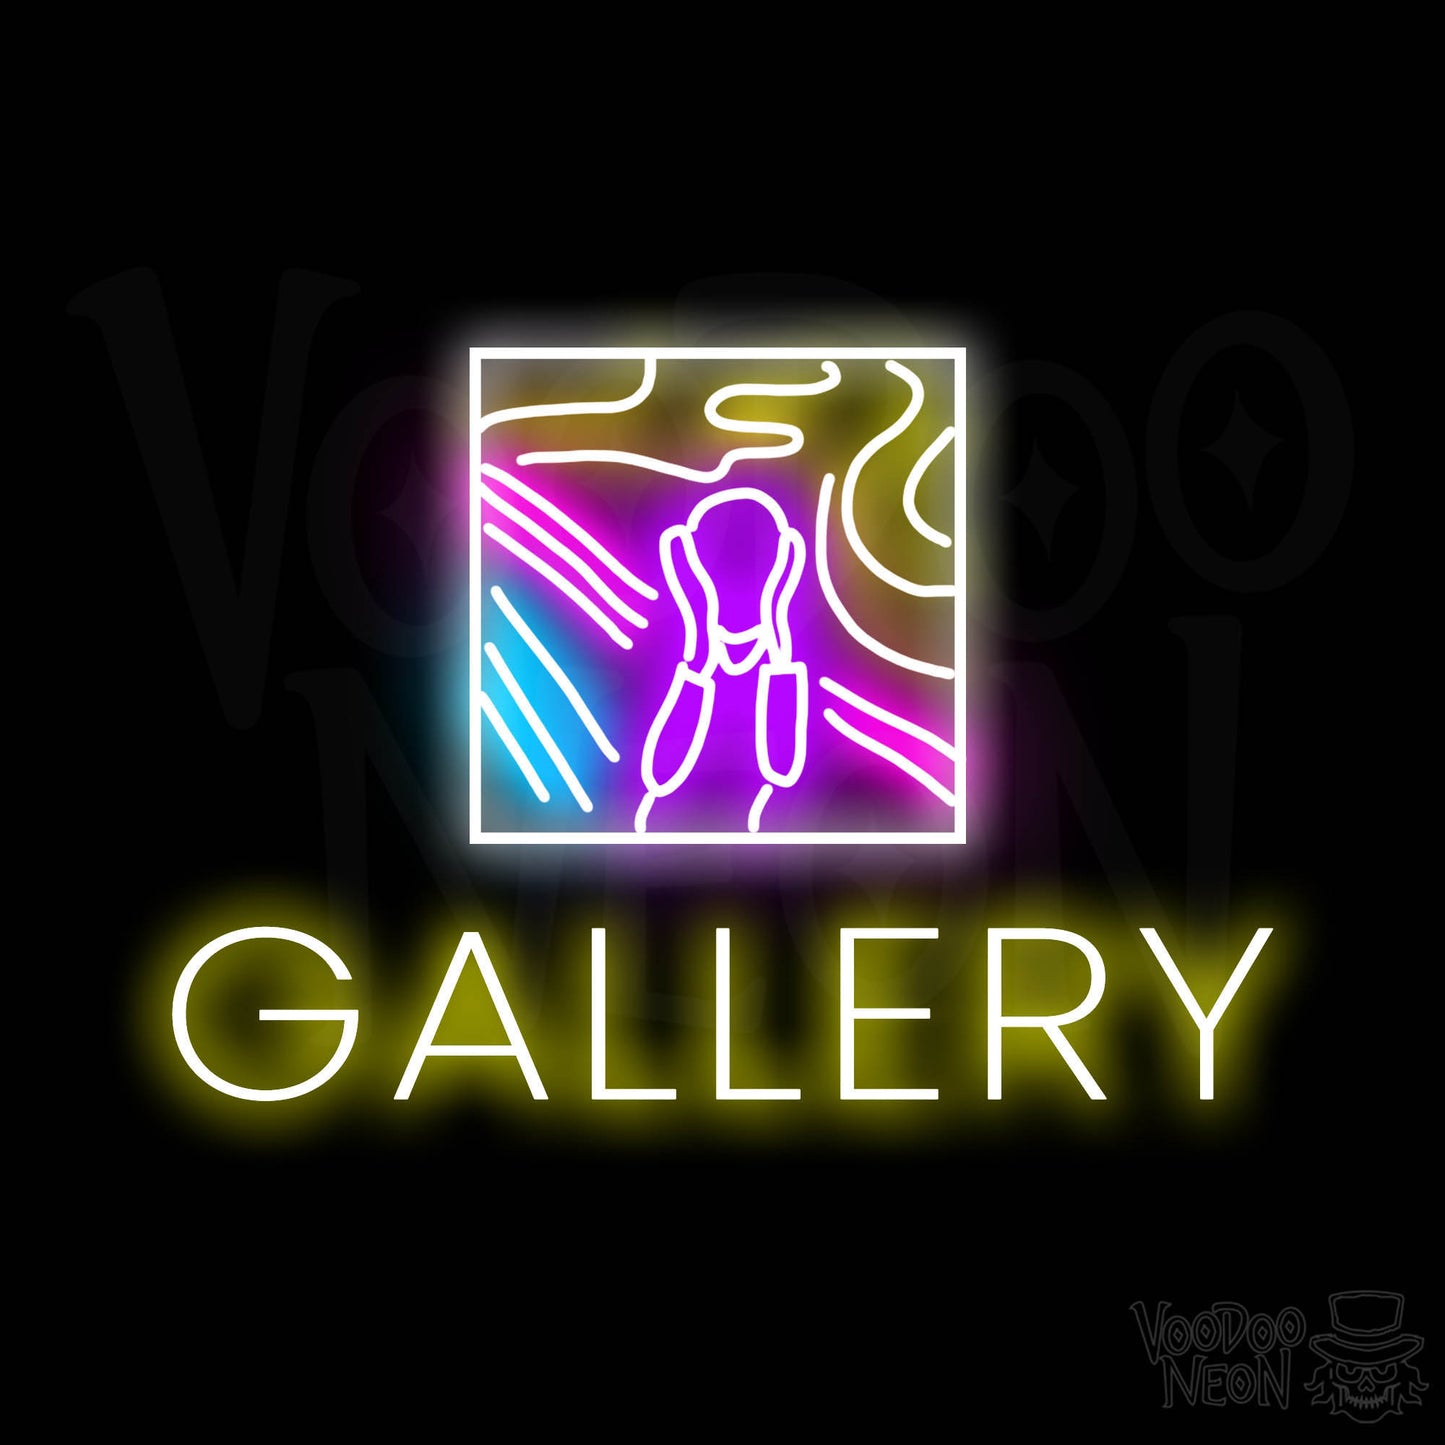 Gallery LED Neon - Multi-Color